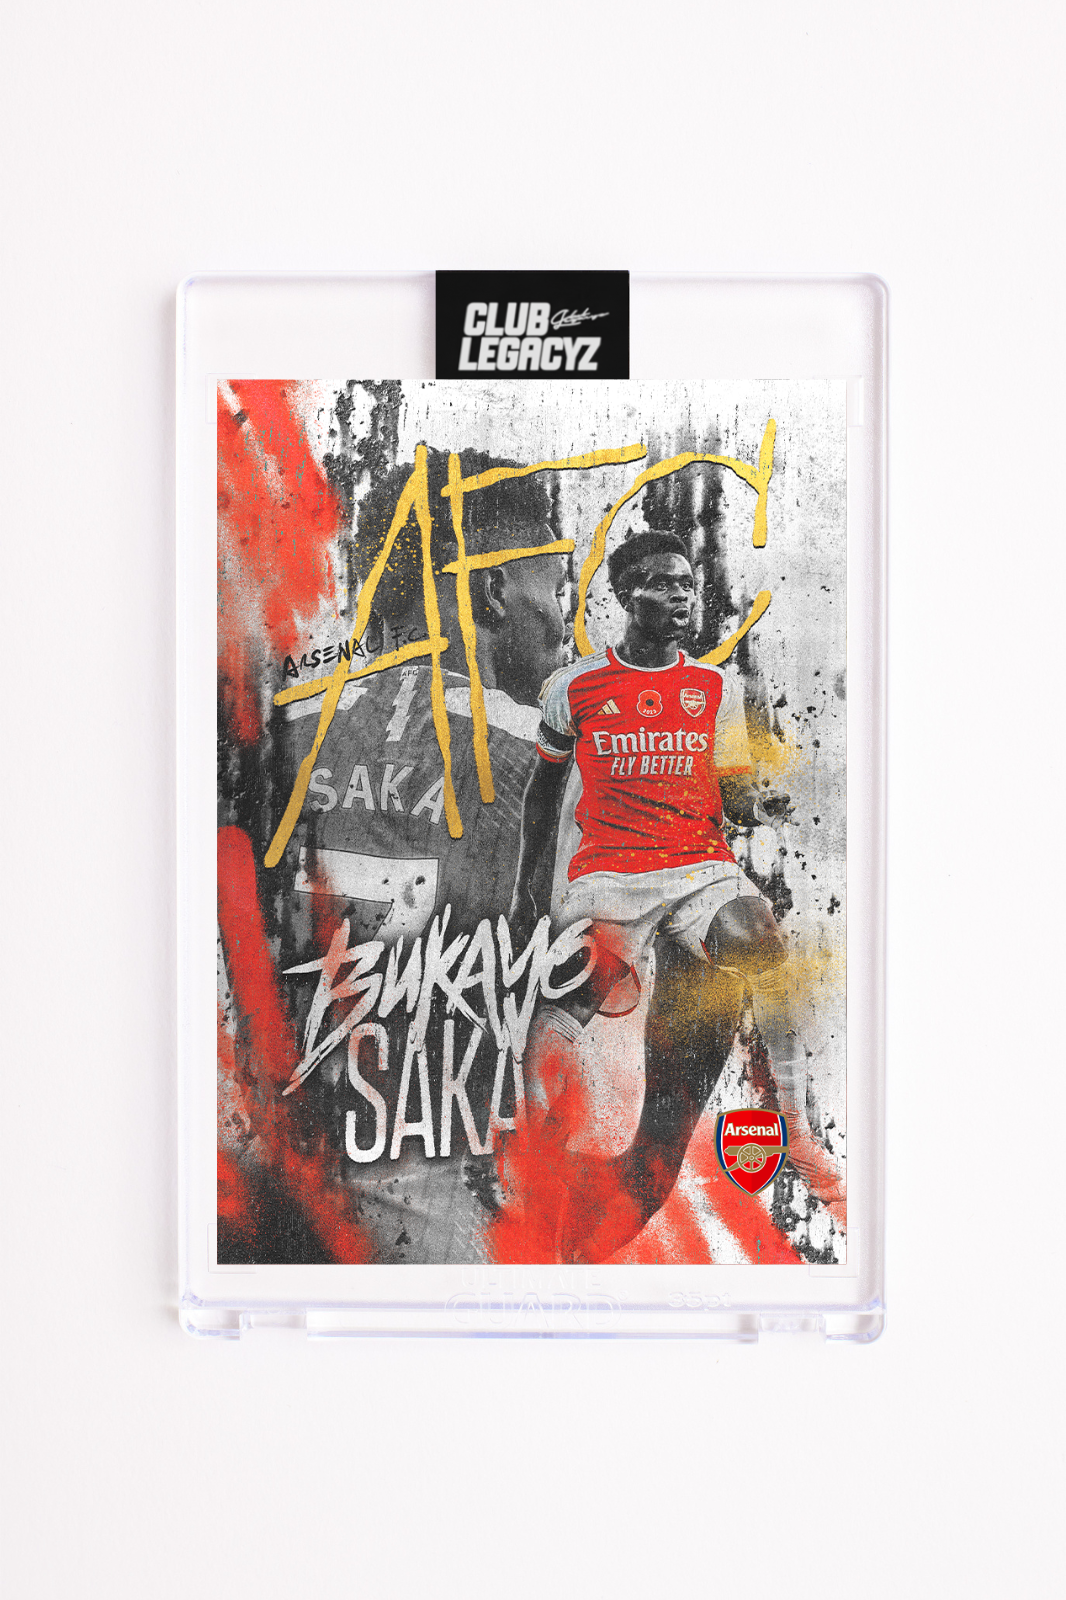 Arsenal FC - Bukayo Saka Black & White Icon limited to 100